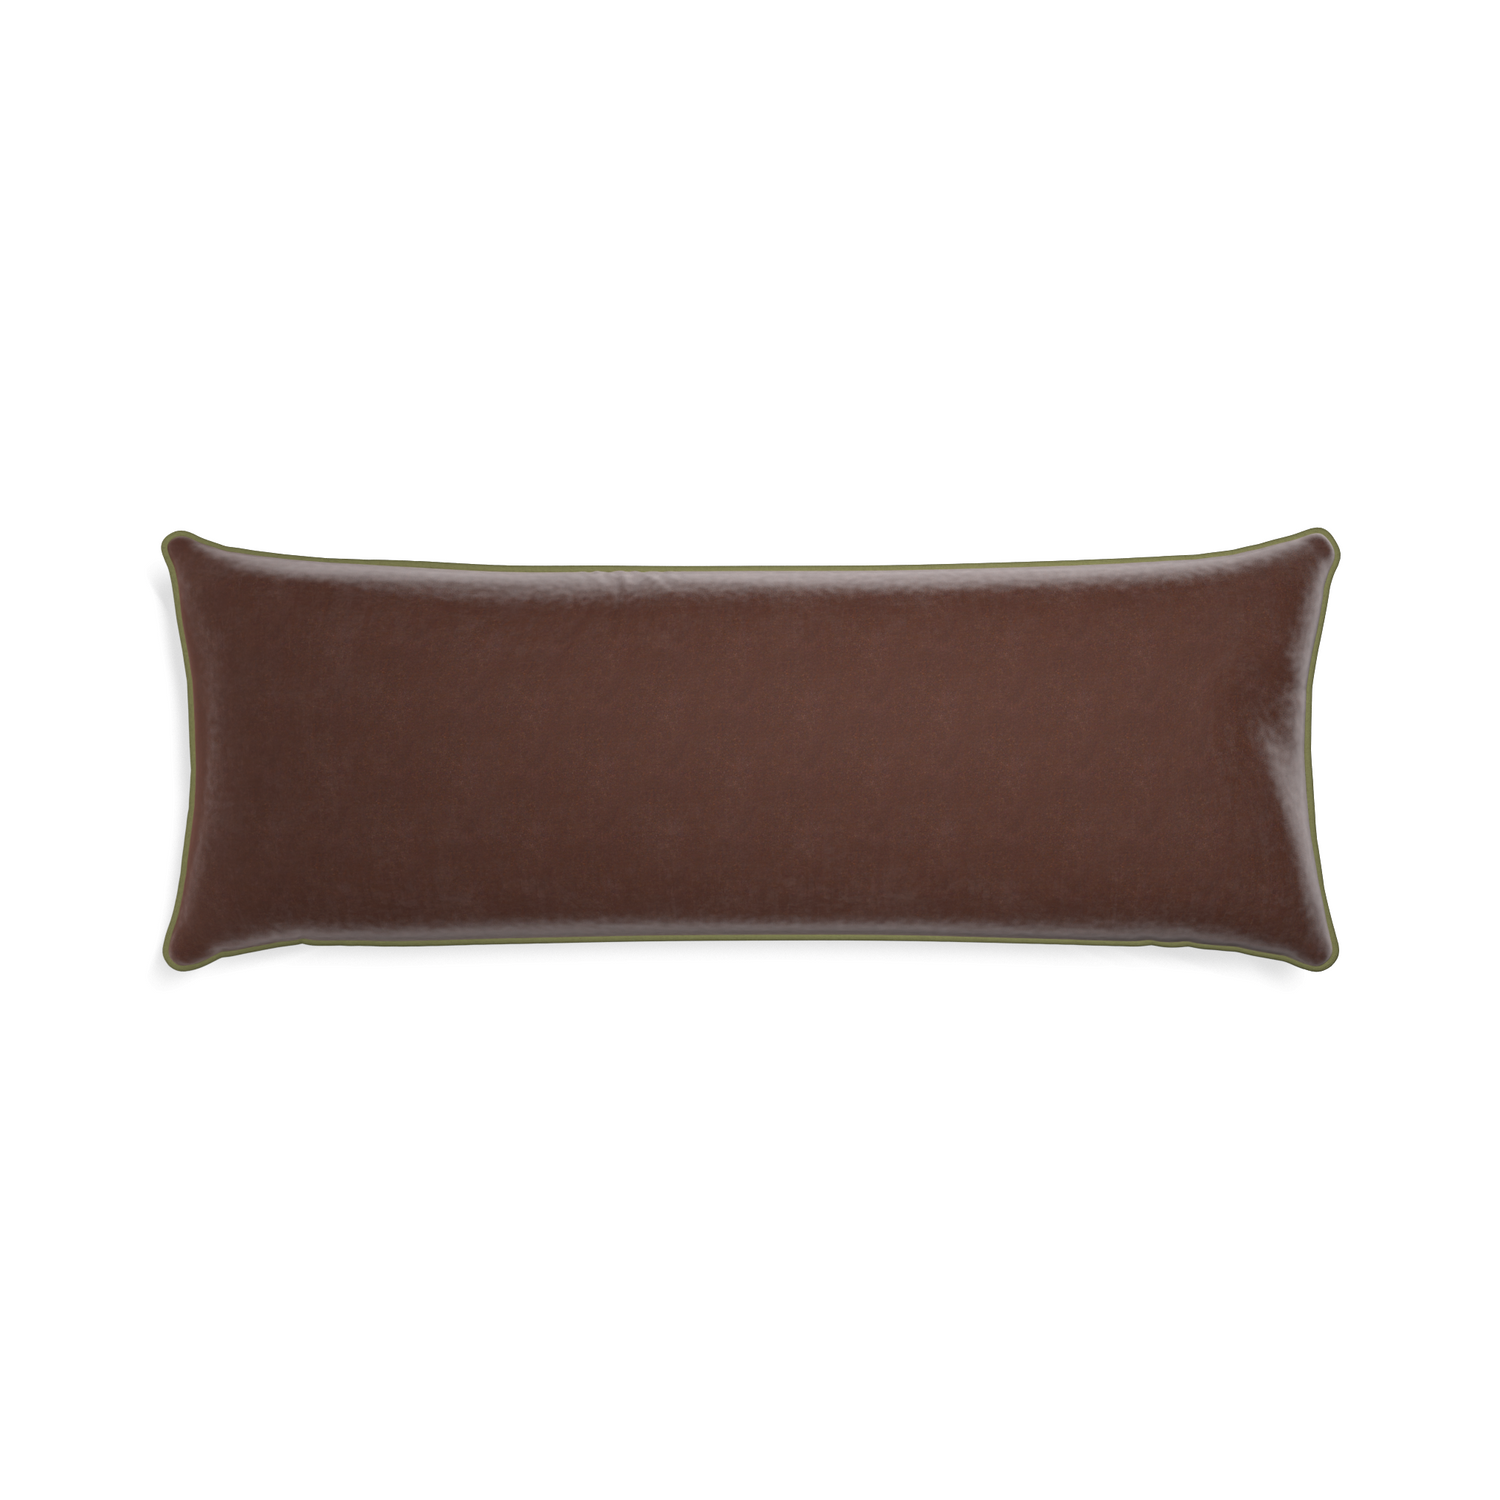 Xl-lumbar walnut velvet custom pillow with moss piping on white background